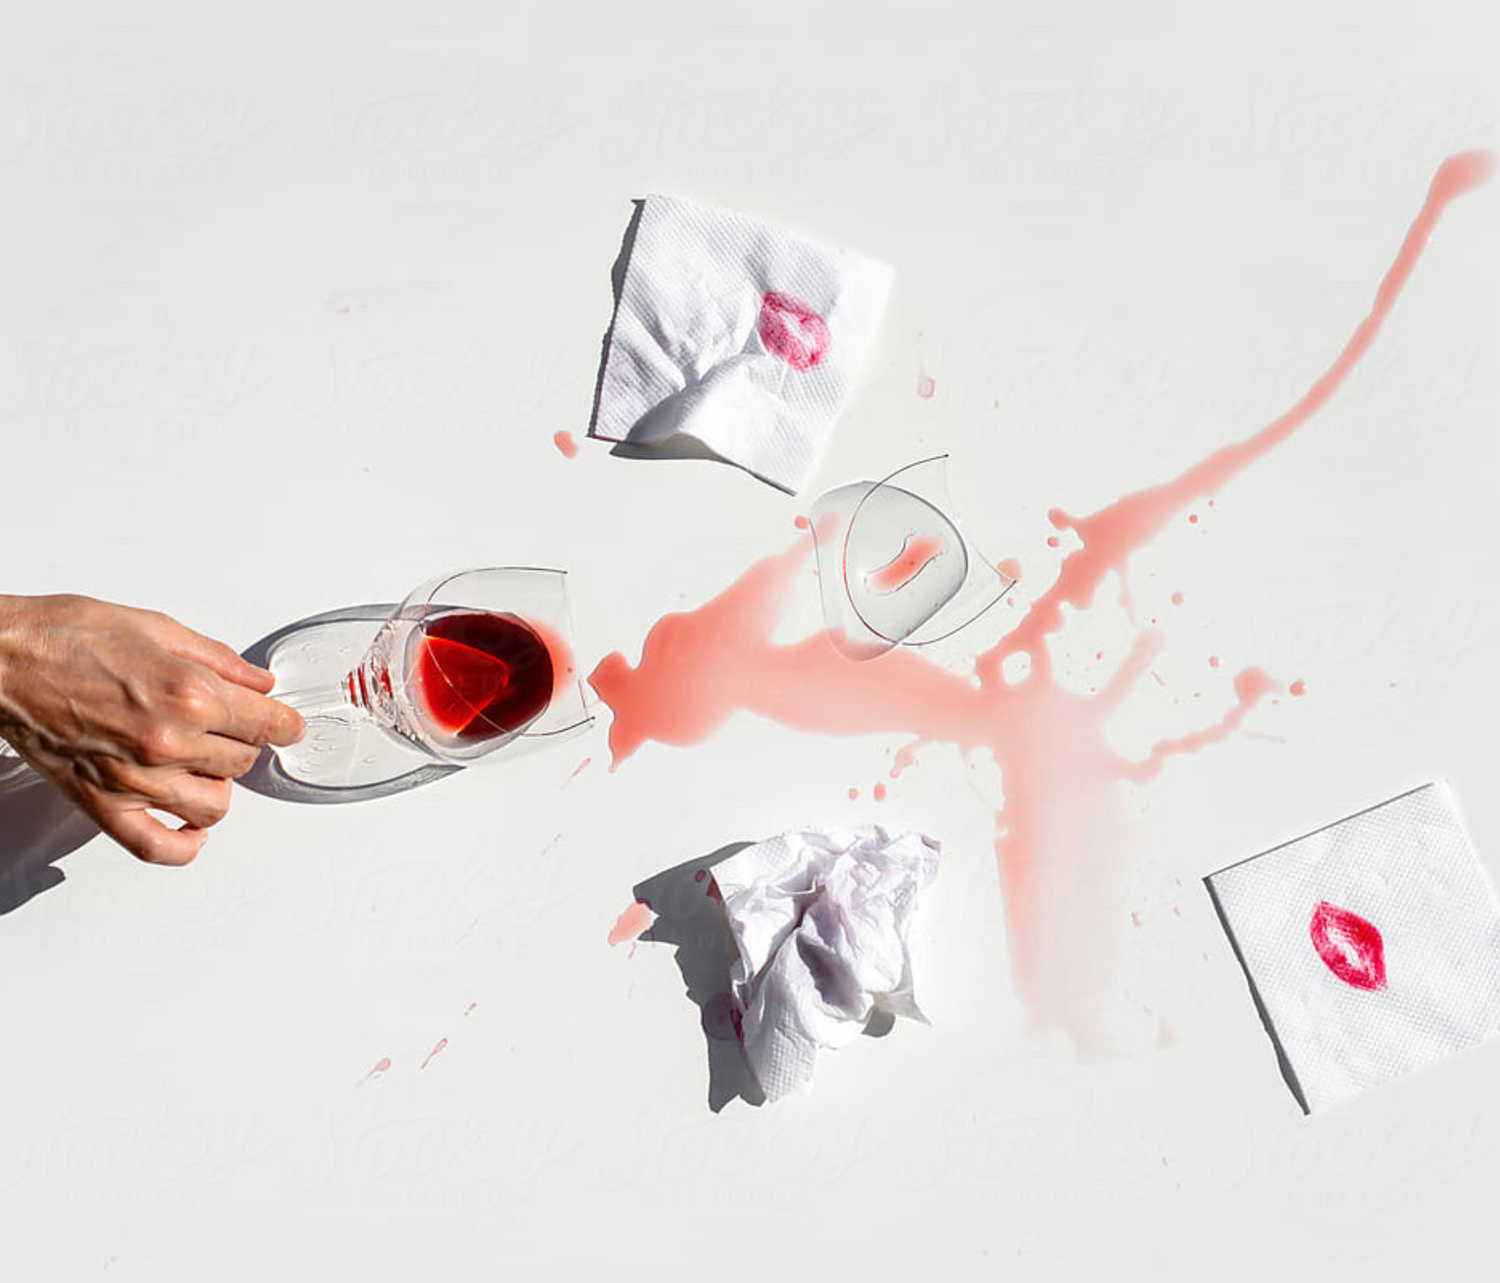 ZERO plastic free wipes red wine spill